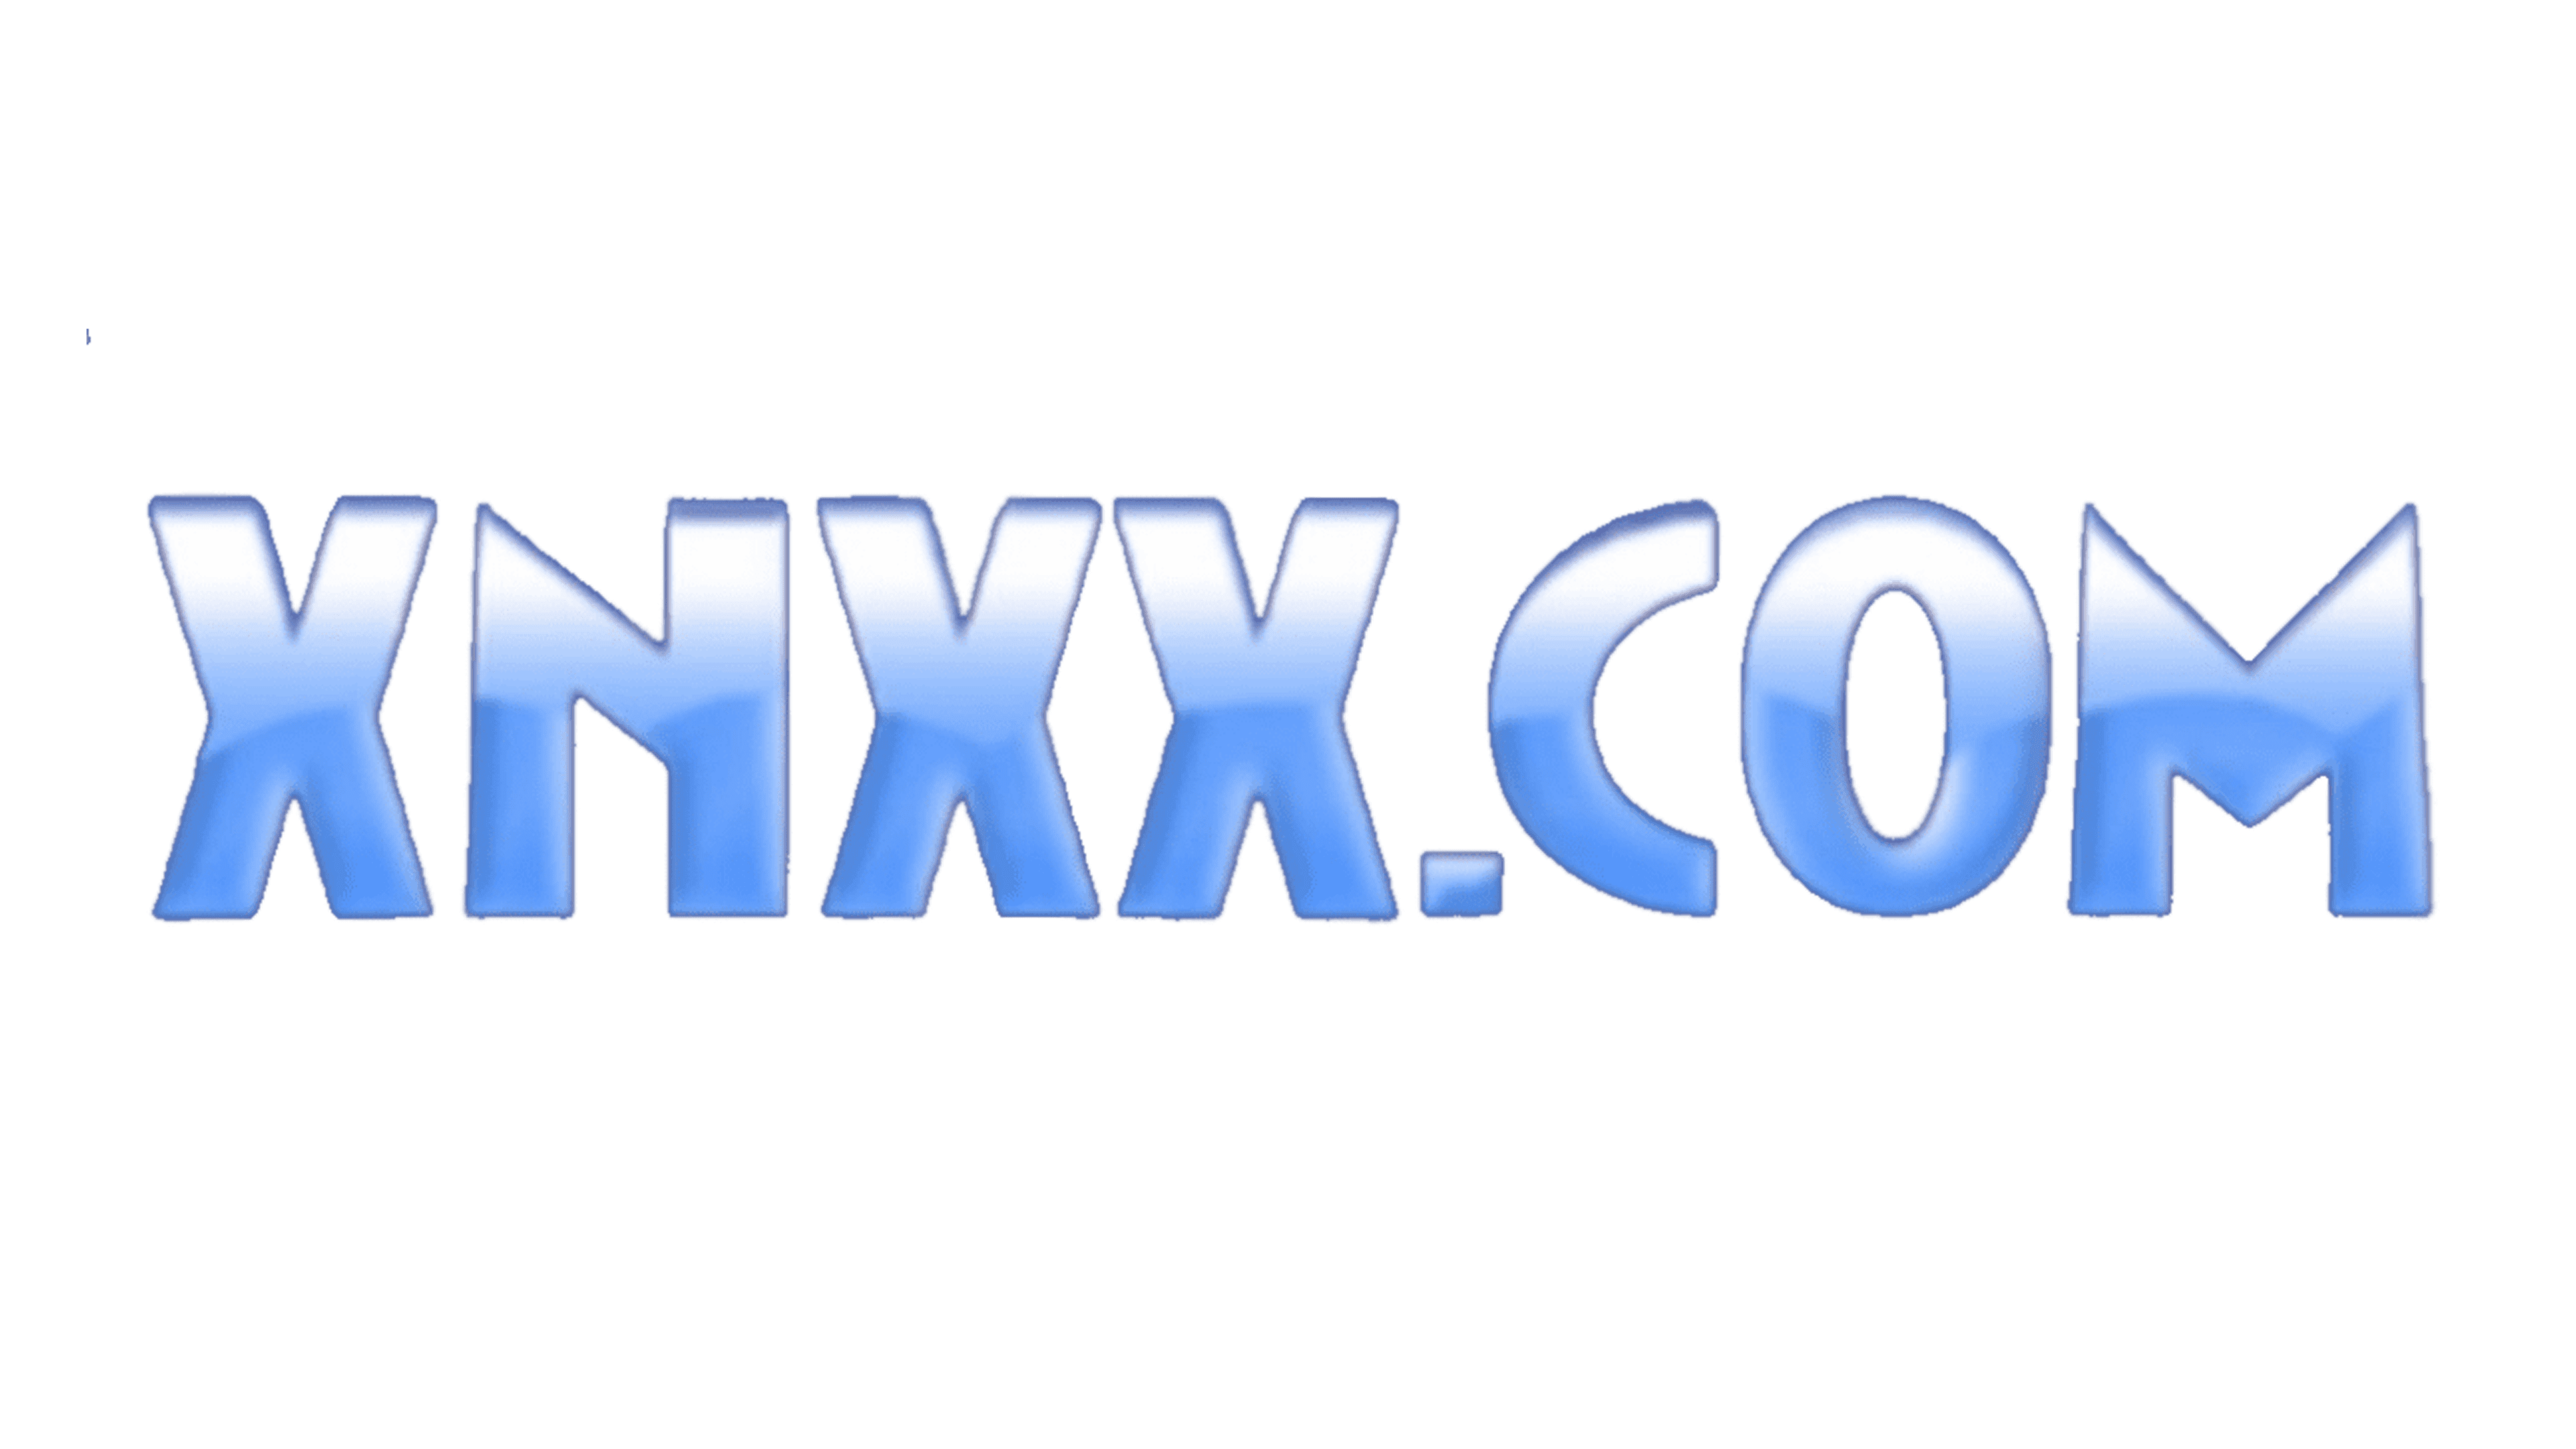 www.xnnx.com